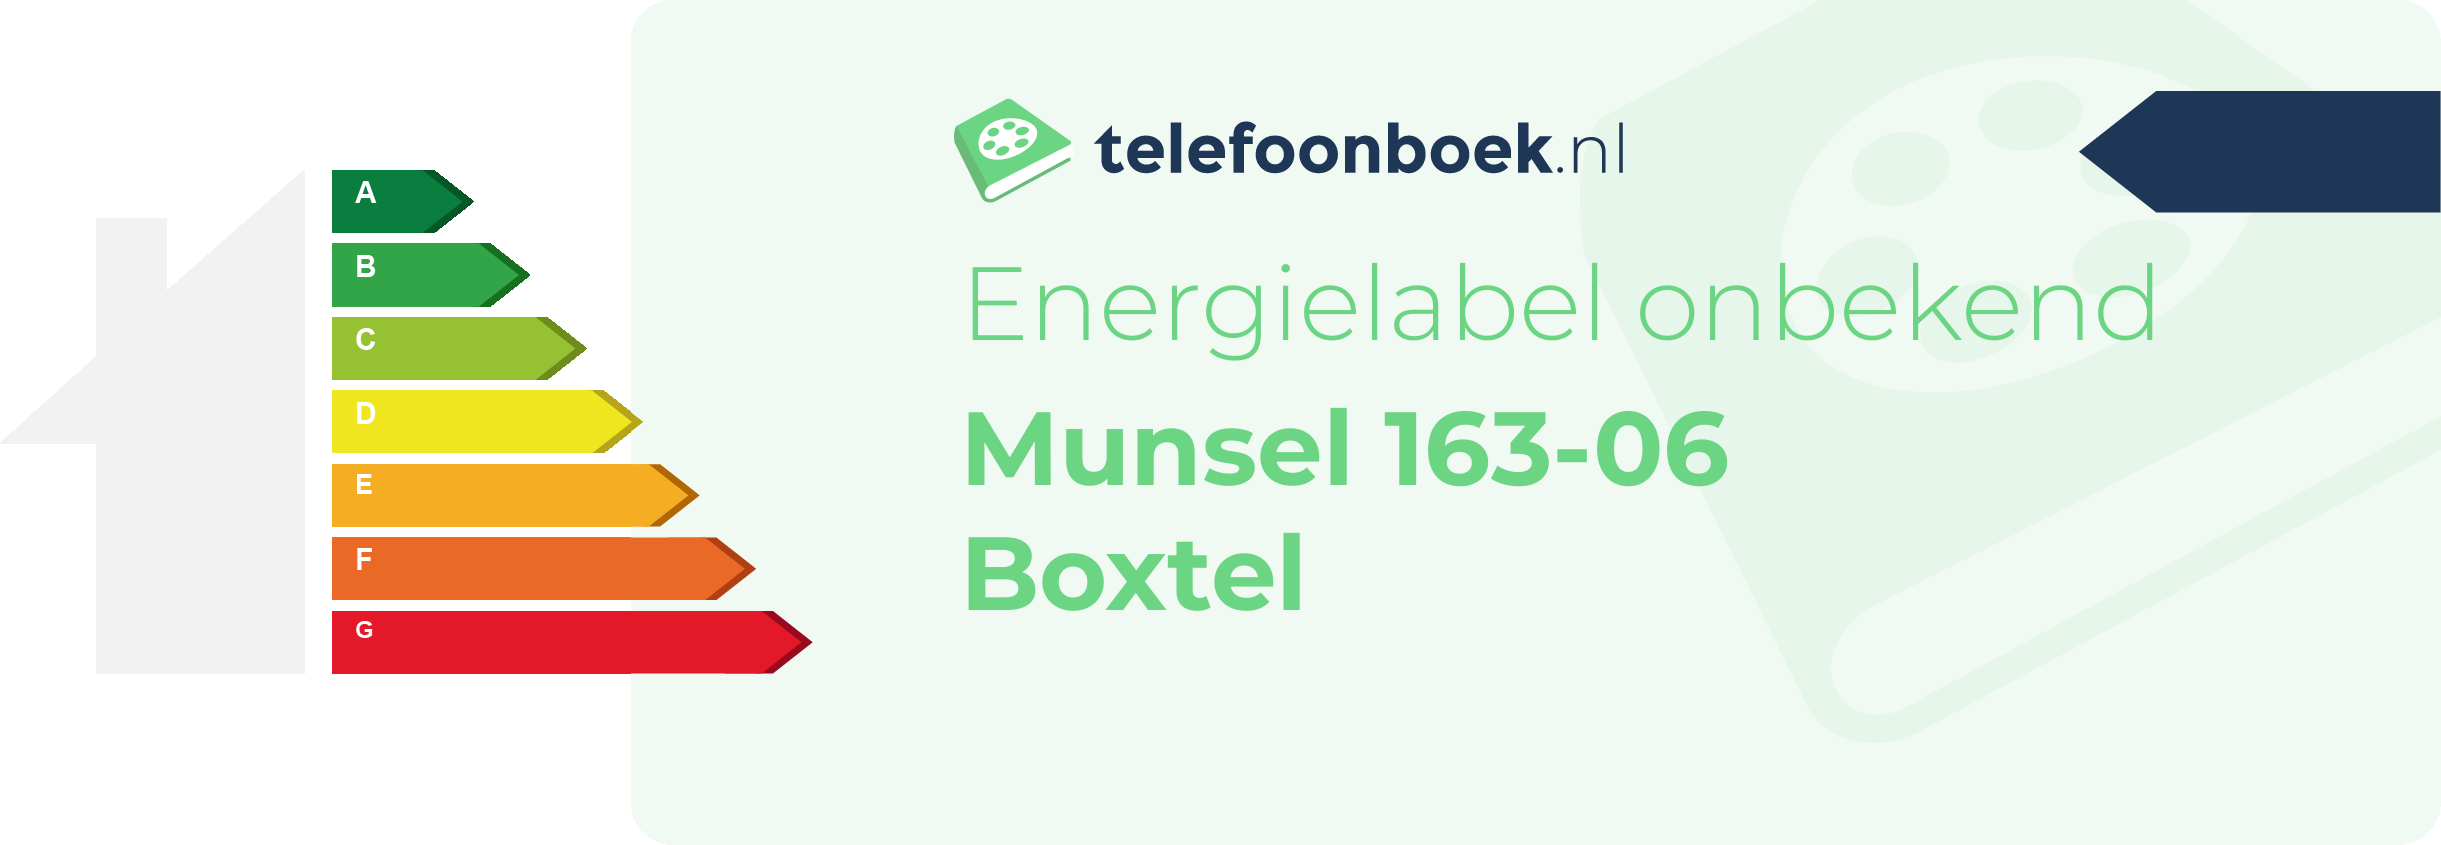 Energielabel Munsel 163-06 Boxtel